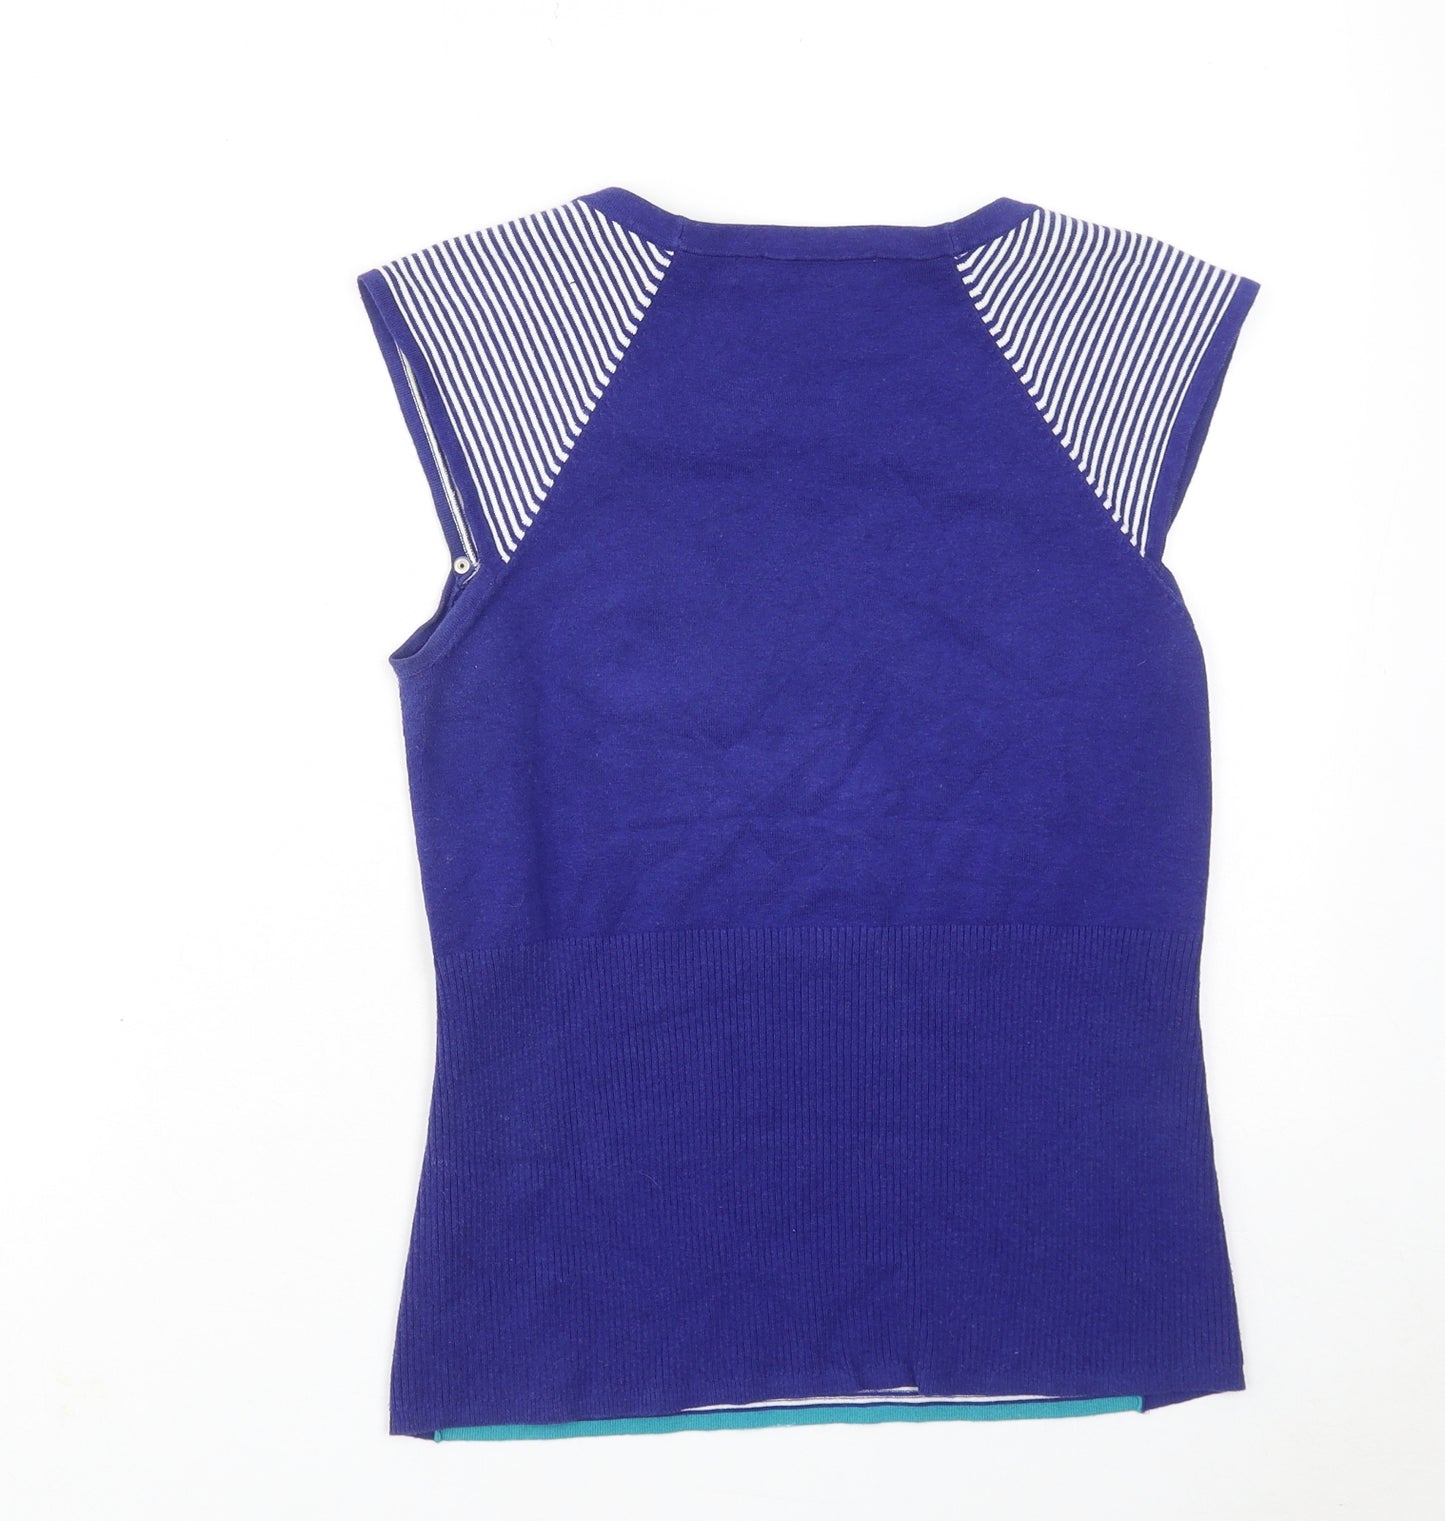 Karen Millen Womens Blue Striped Cotton Basic T-Shirt Size S Scoop Neck